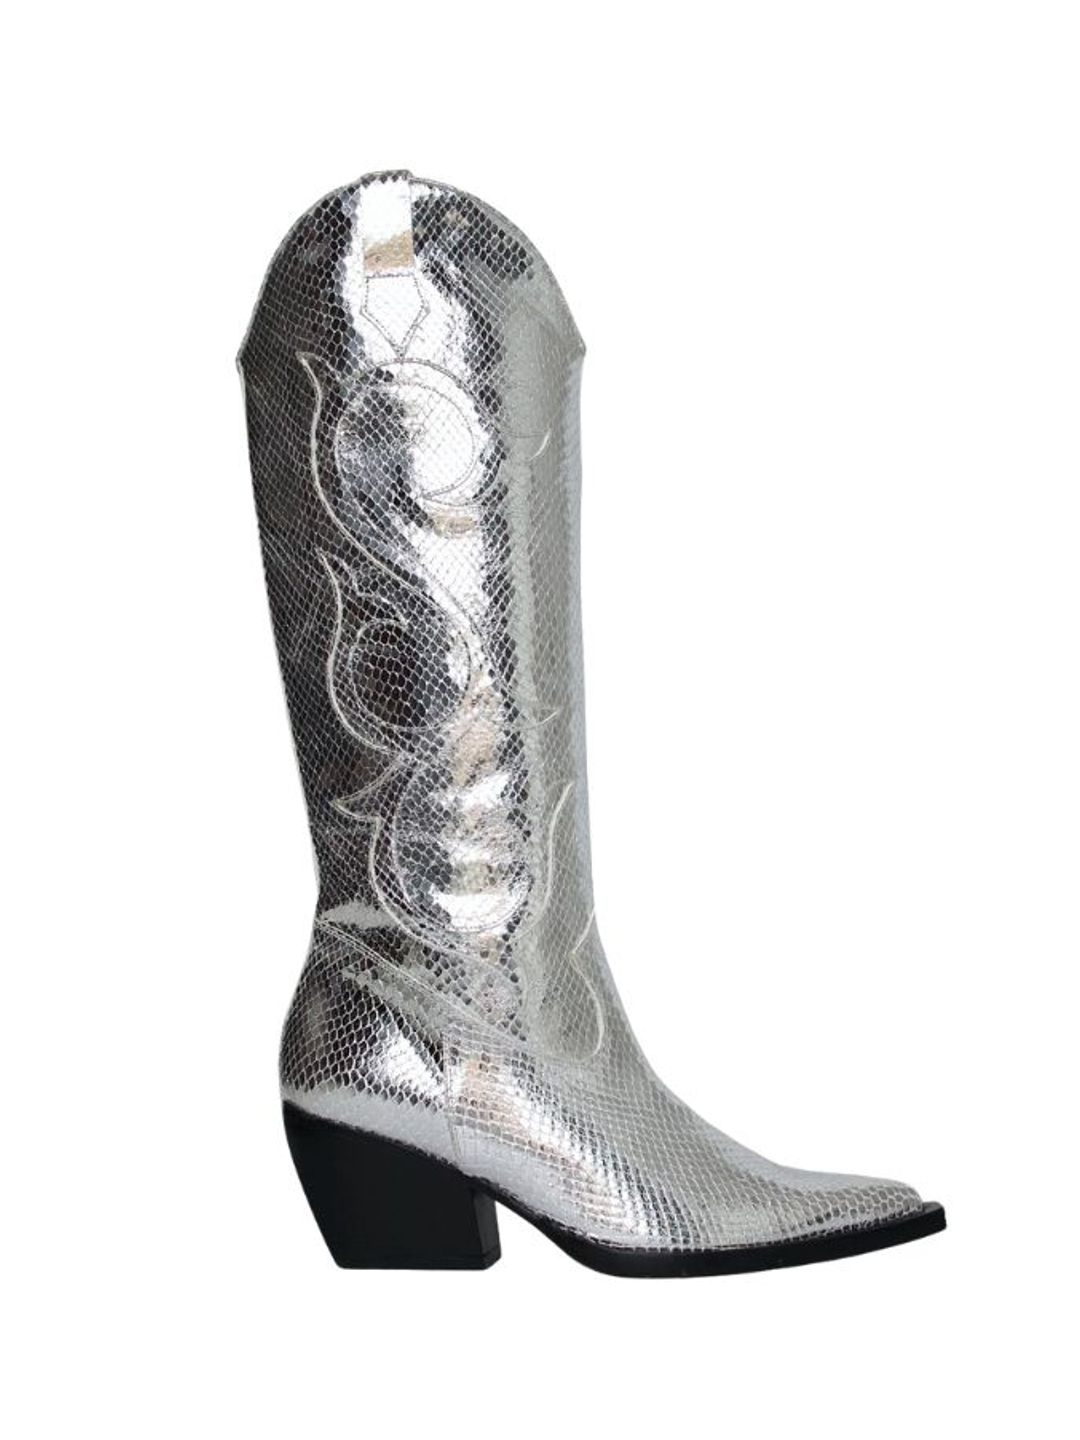 Silver cowboy boots